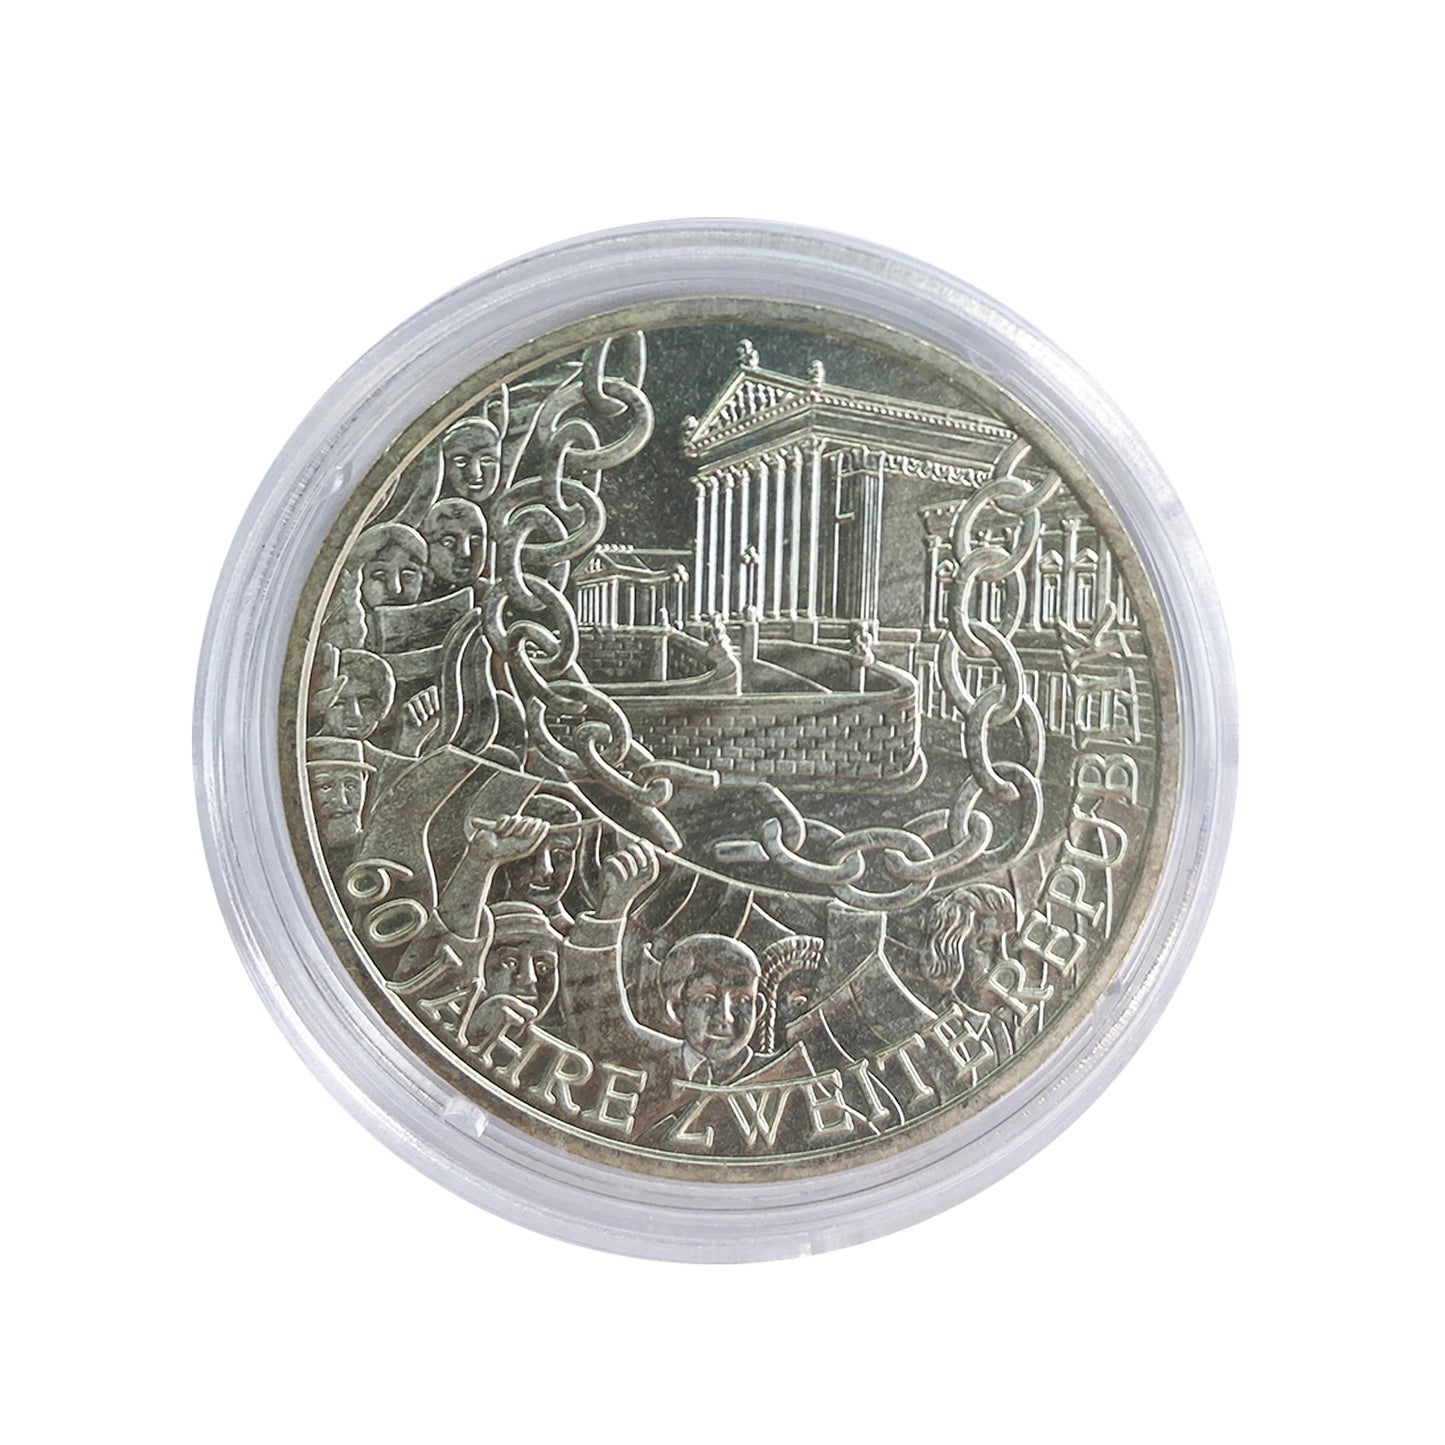 Austria - Moneda 10 euros plata 2005 - Segunda Republica